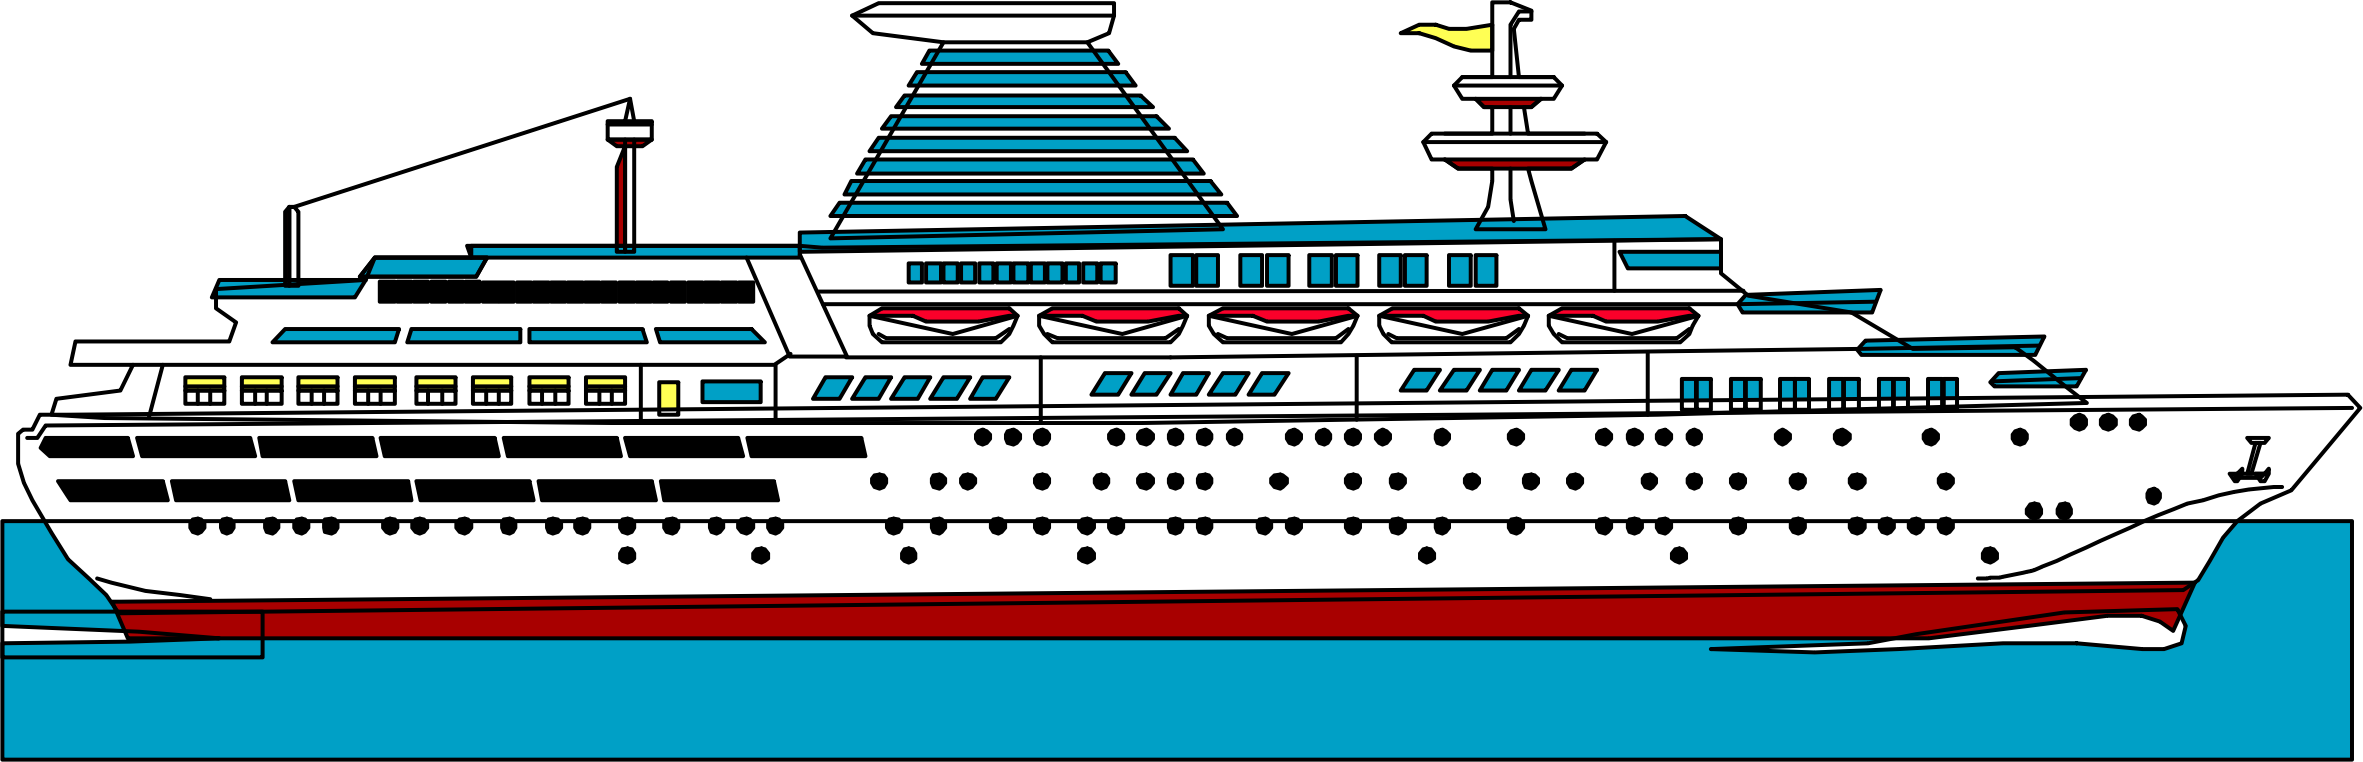 Luxury Cruise Liner Illustration